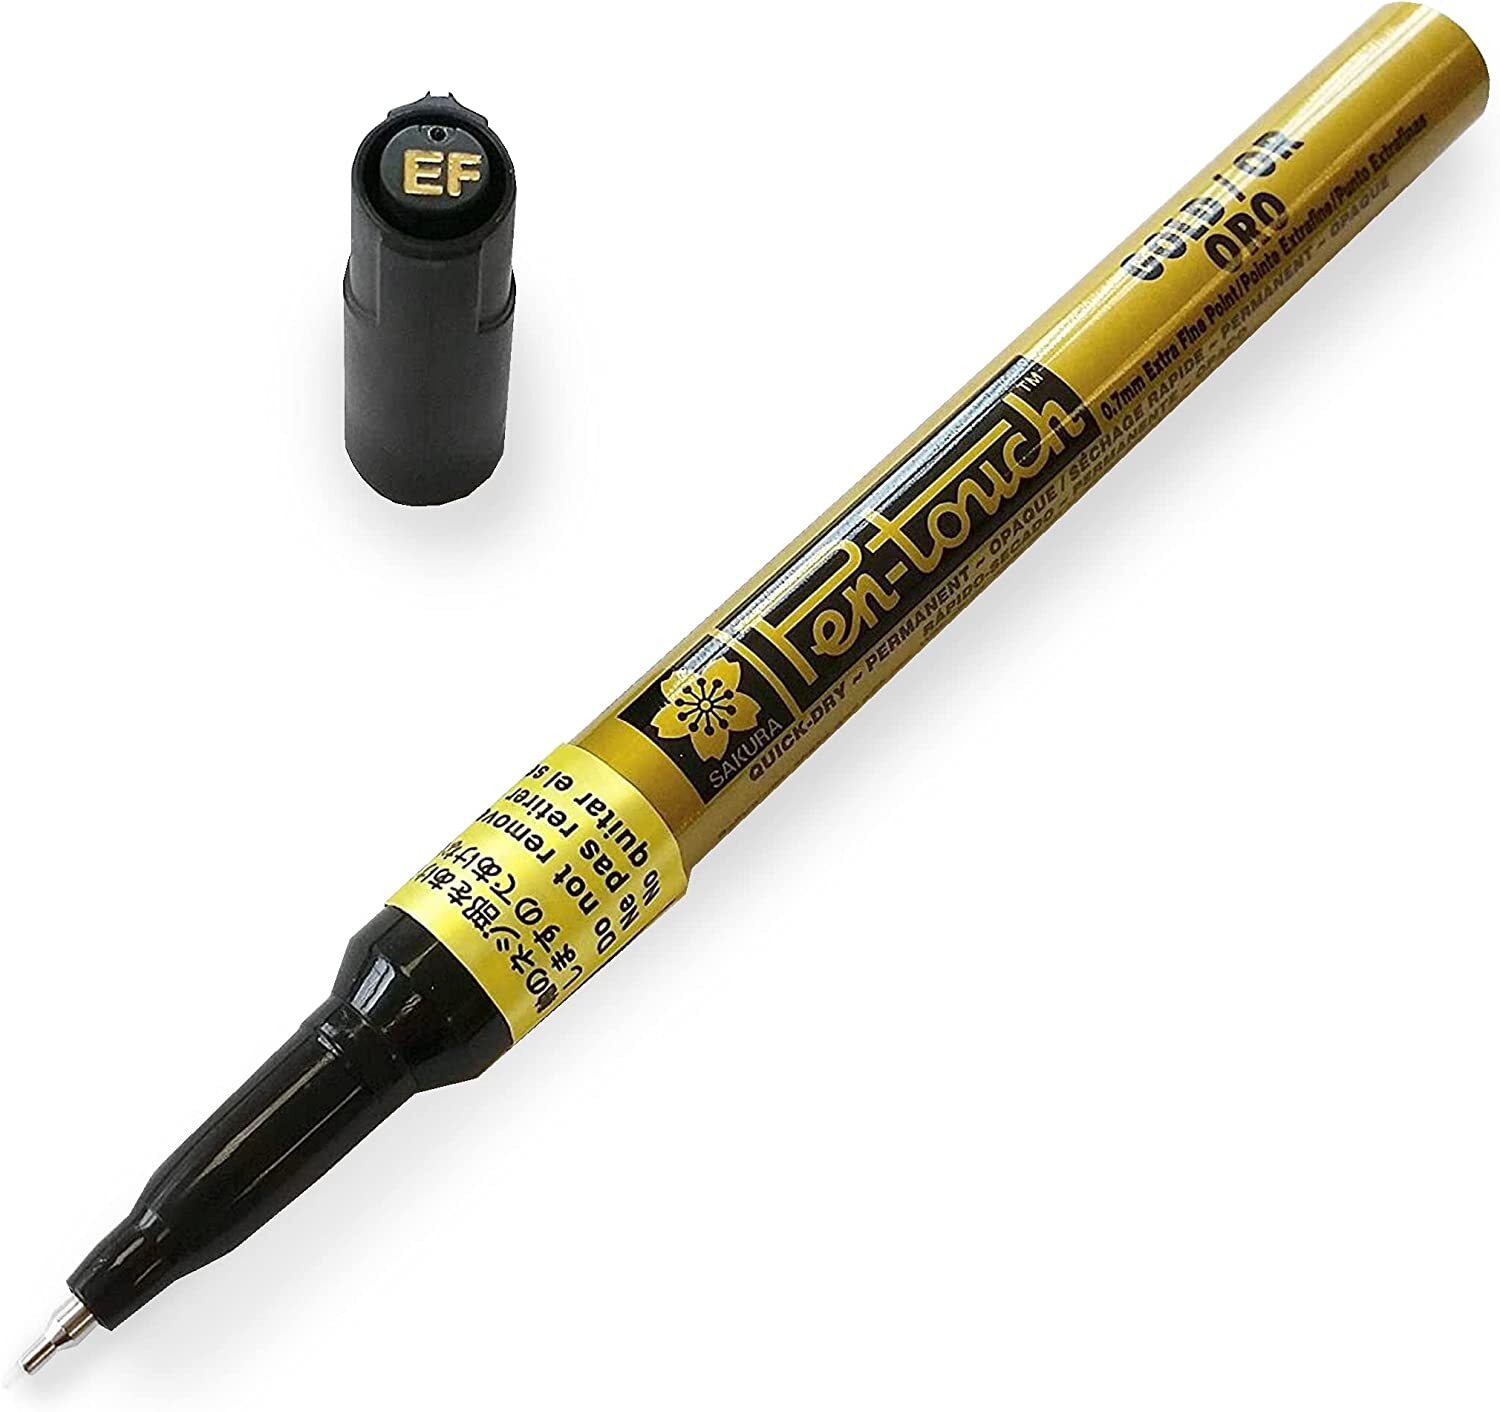 Sakura Pen Touch Paint Marker 0.7mm Extra Fine Point Gold 41101